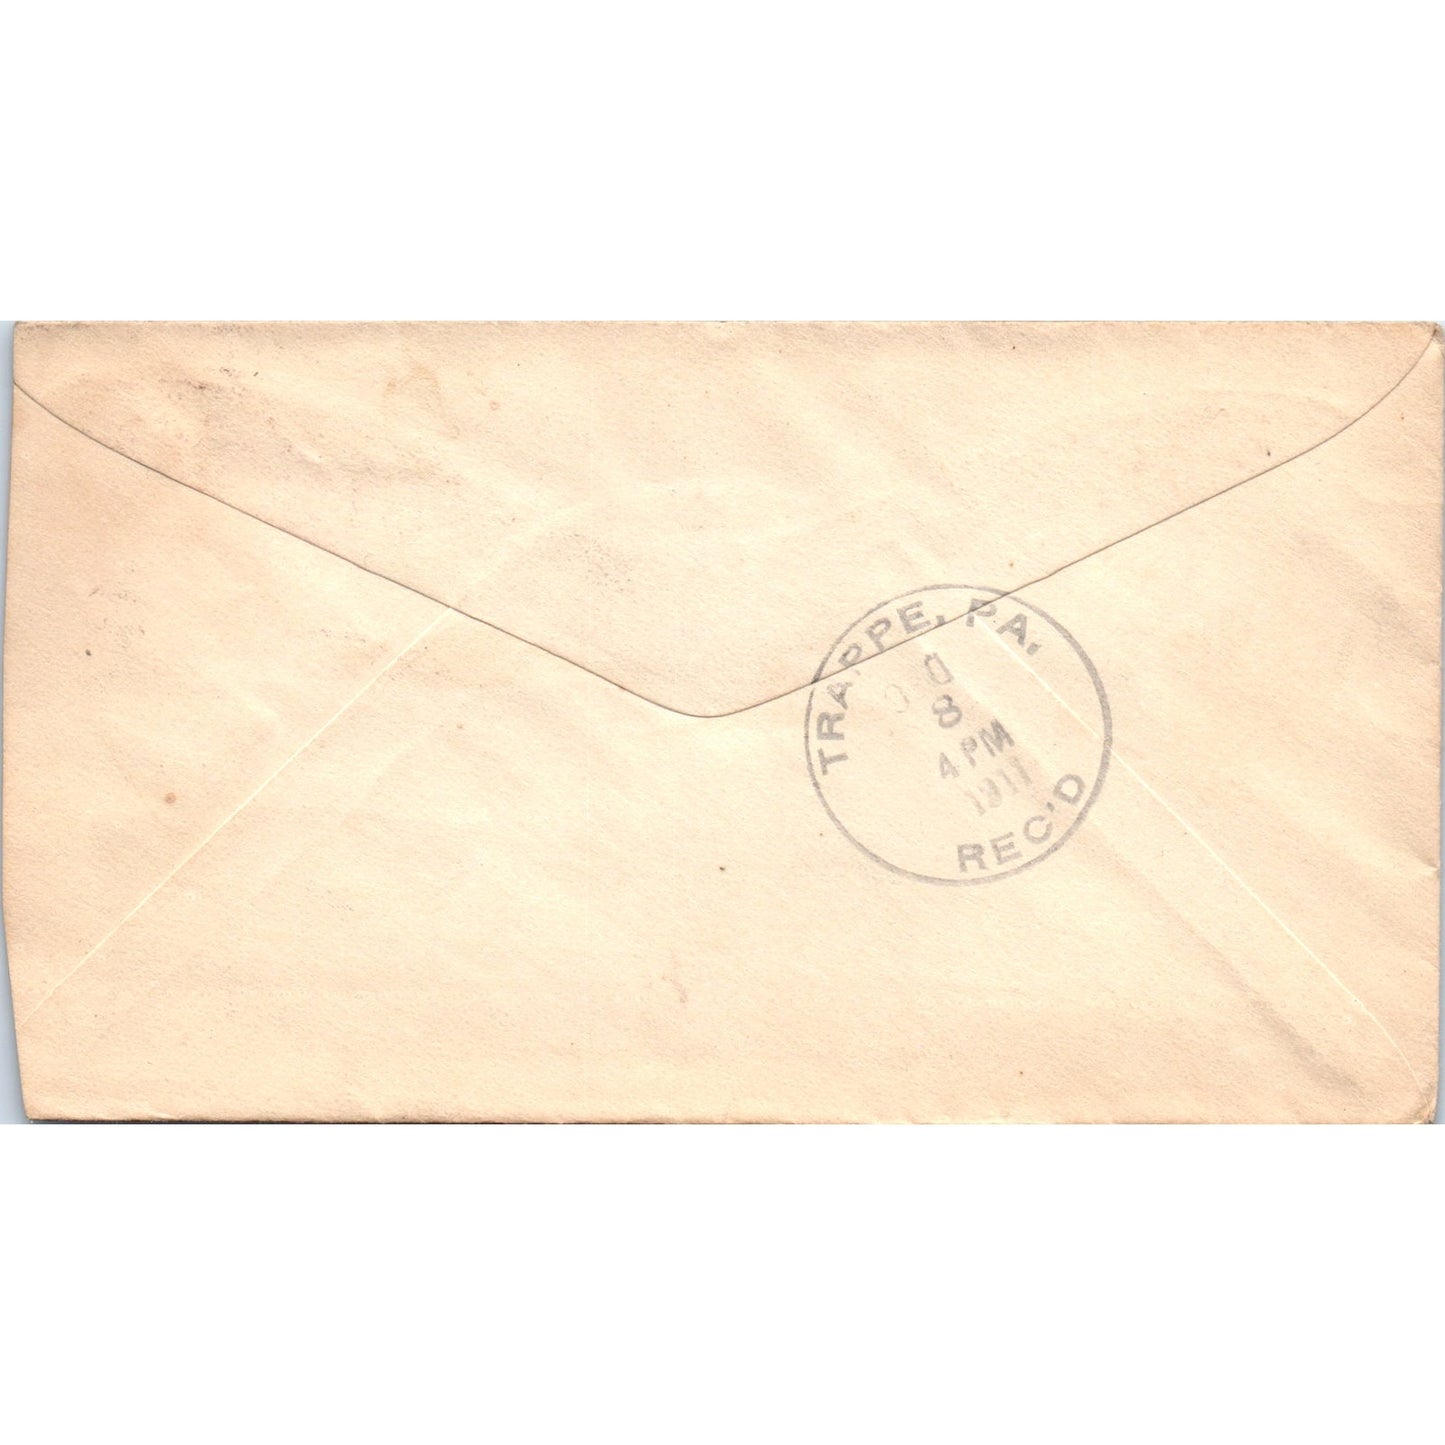 1911 J.C. Chaffee & Son Lee Jane J. Rambo Trappe Postal Cover Envelope TG7-PC2